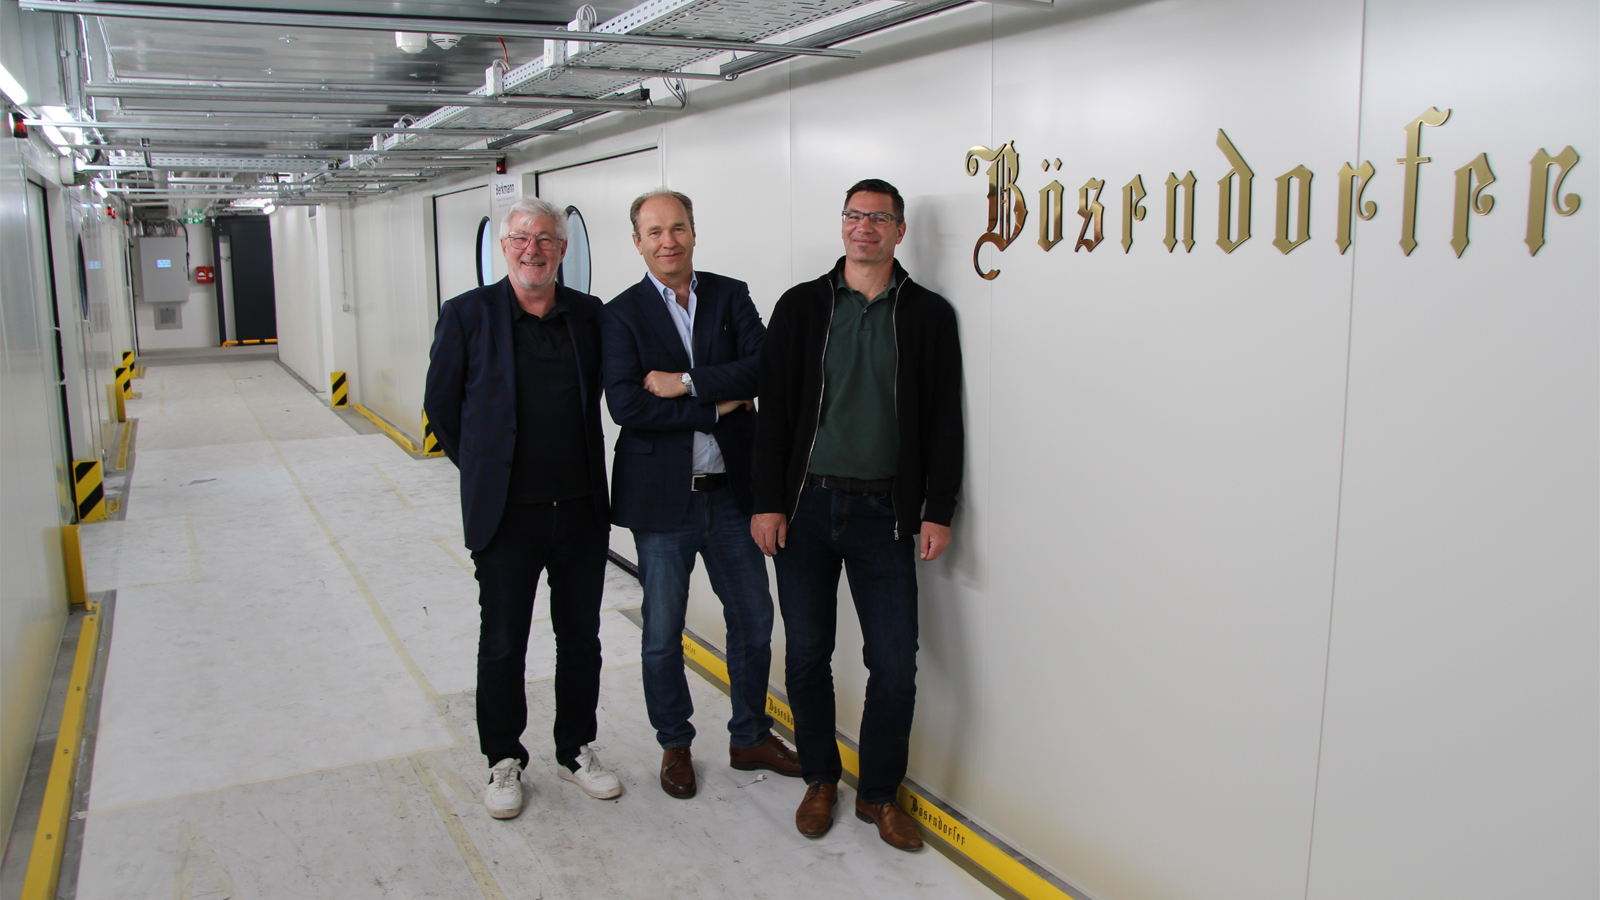 Rainer Berkmann, head of sales and technology at Berkmann Lackieranlagen; Thomas Broukal, technical and manufacturing director at Bösendorfer Klavierfabrik; and Ralph Schmoll, technical manager at Berkmann Lackieranlagen (left to right). 